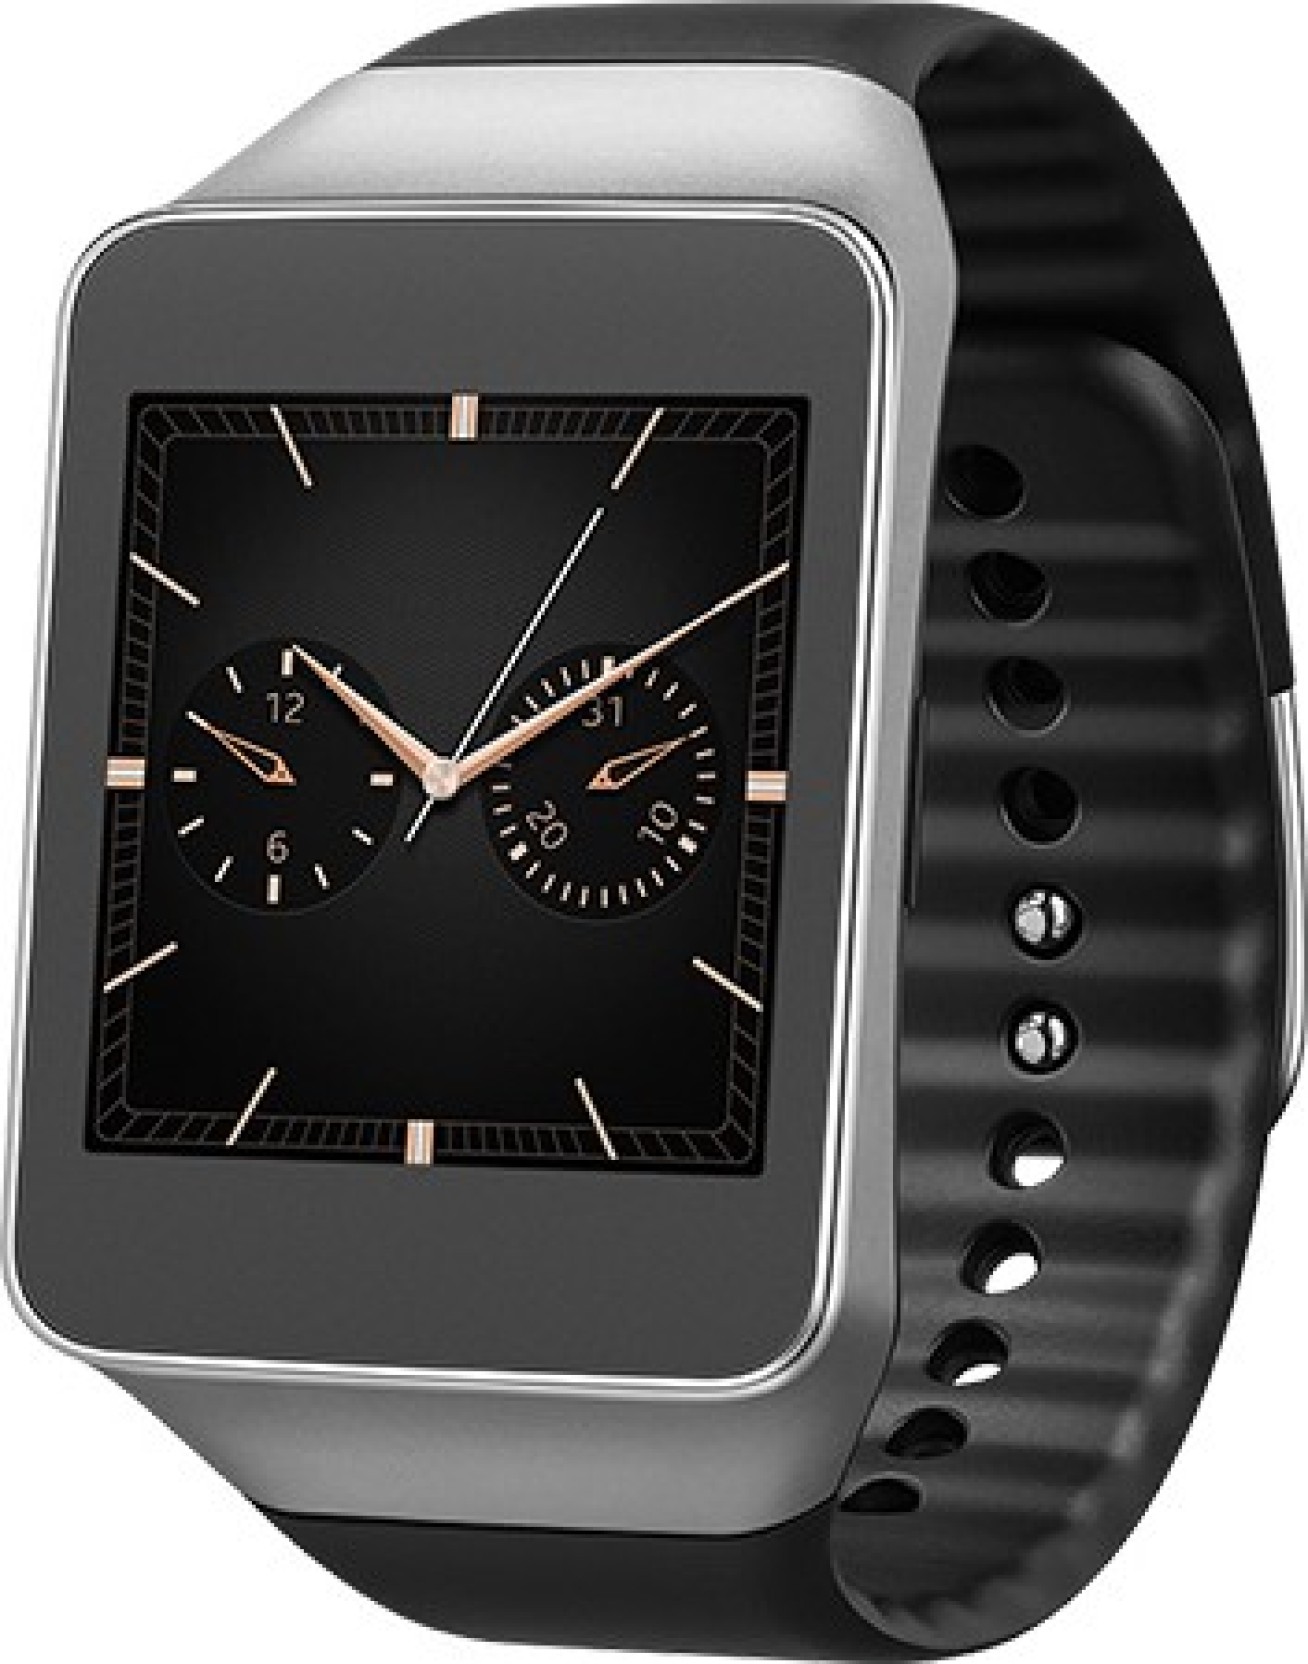 Samsung Gear Live Smartwatch Price in India - Buy Samsung ...